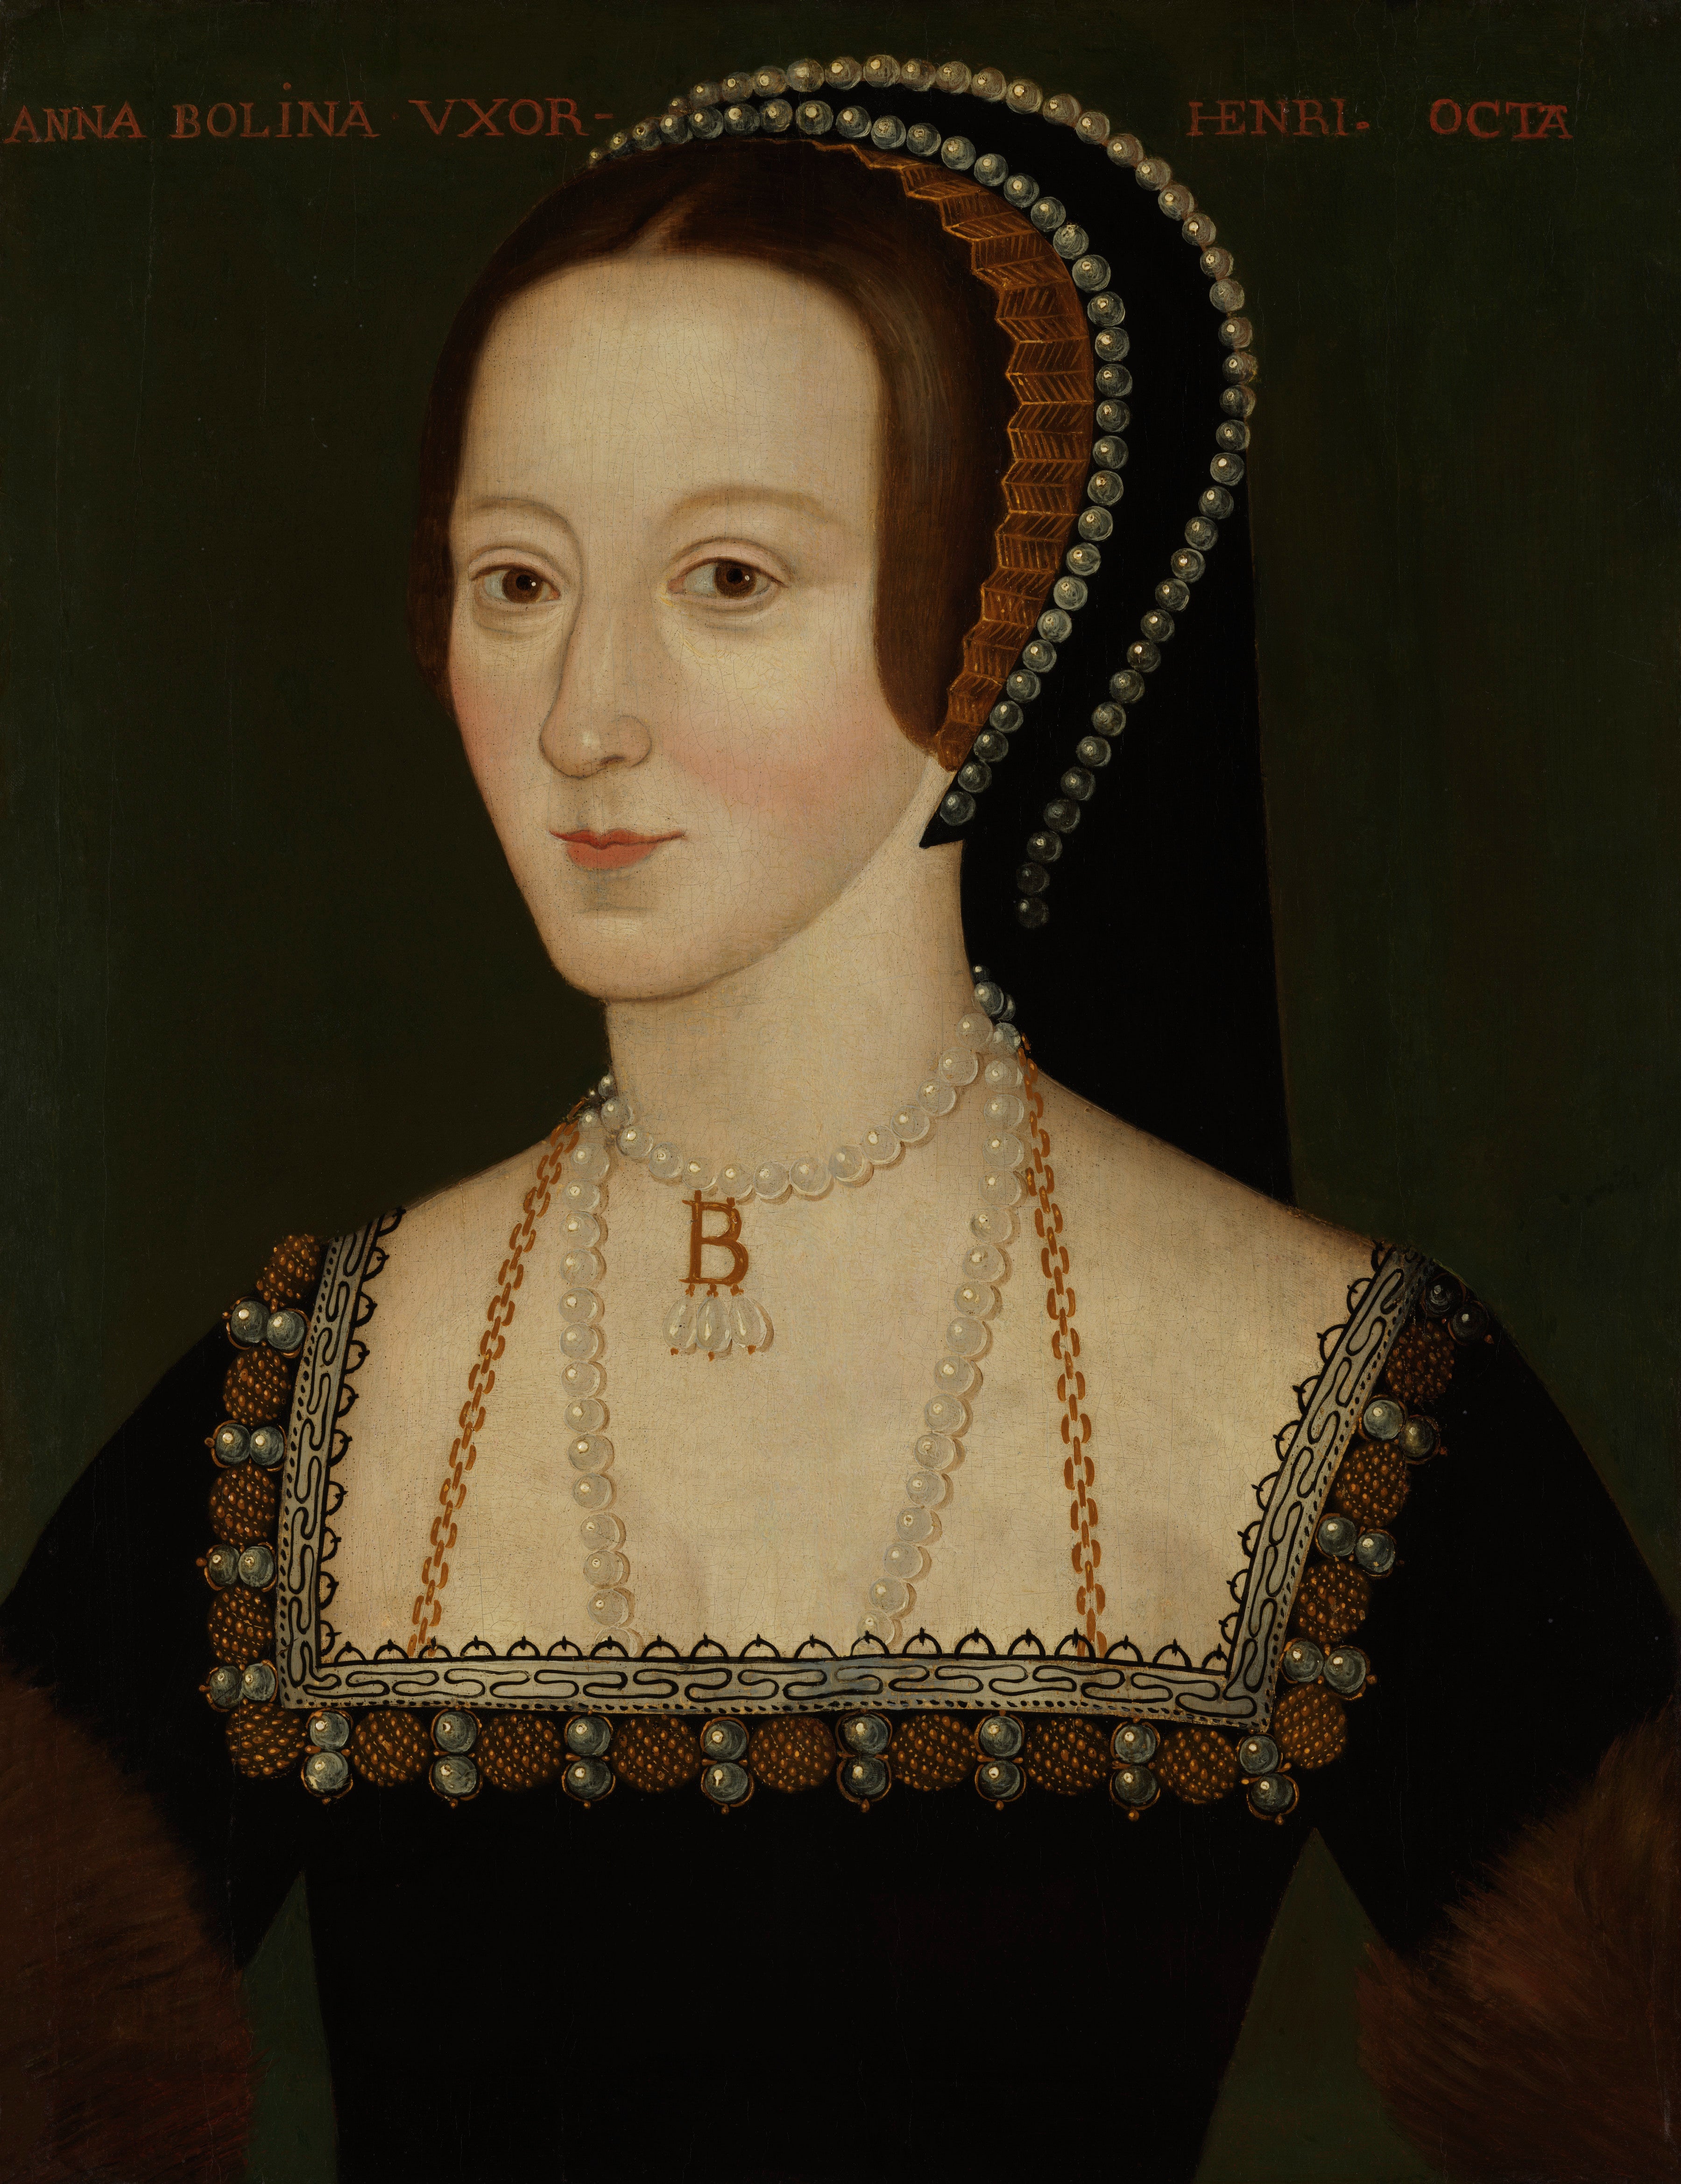 A portrait of Anne Boleyn by an unknown artist